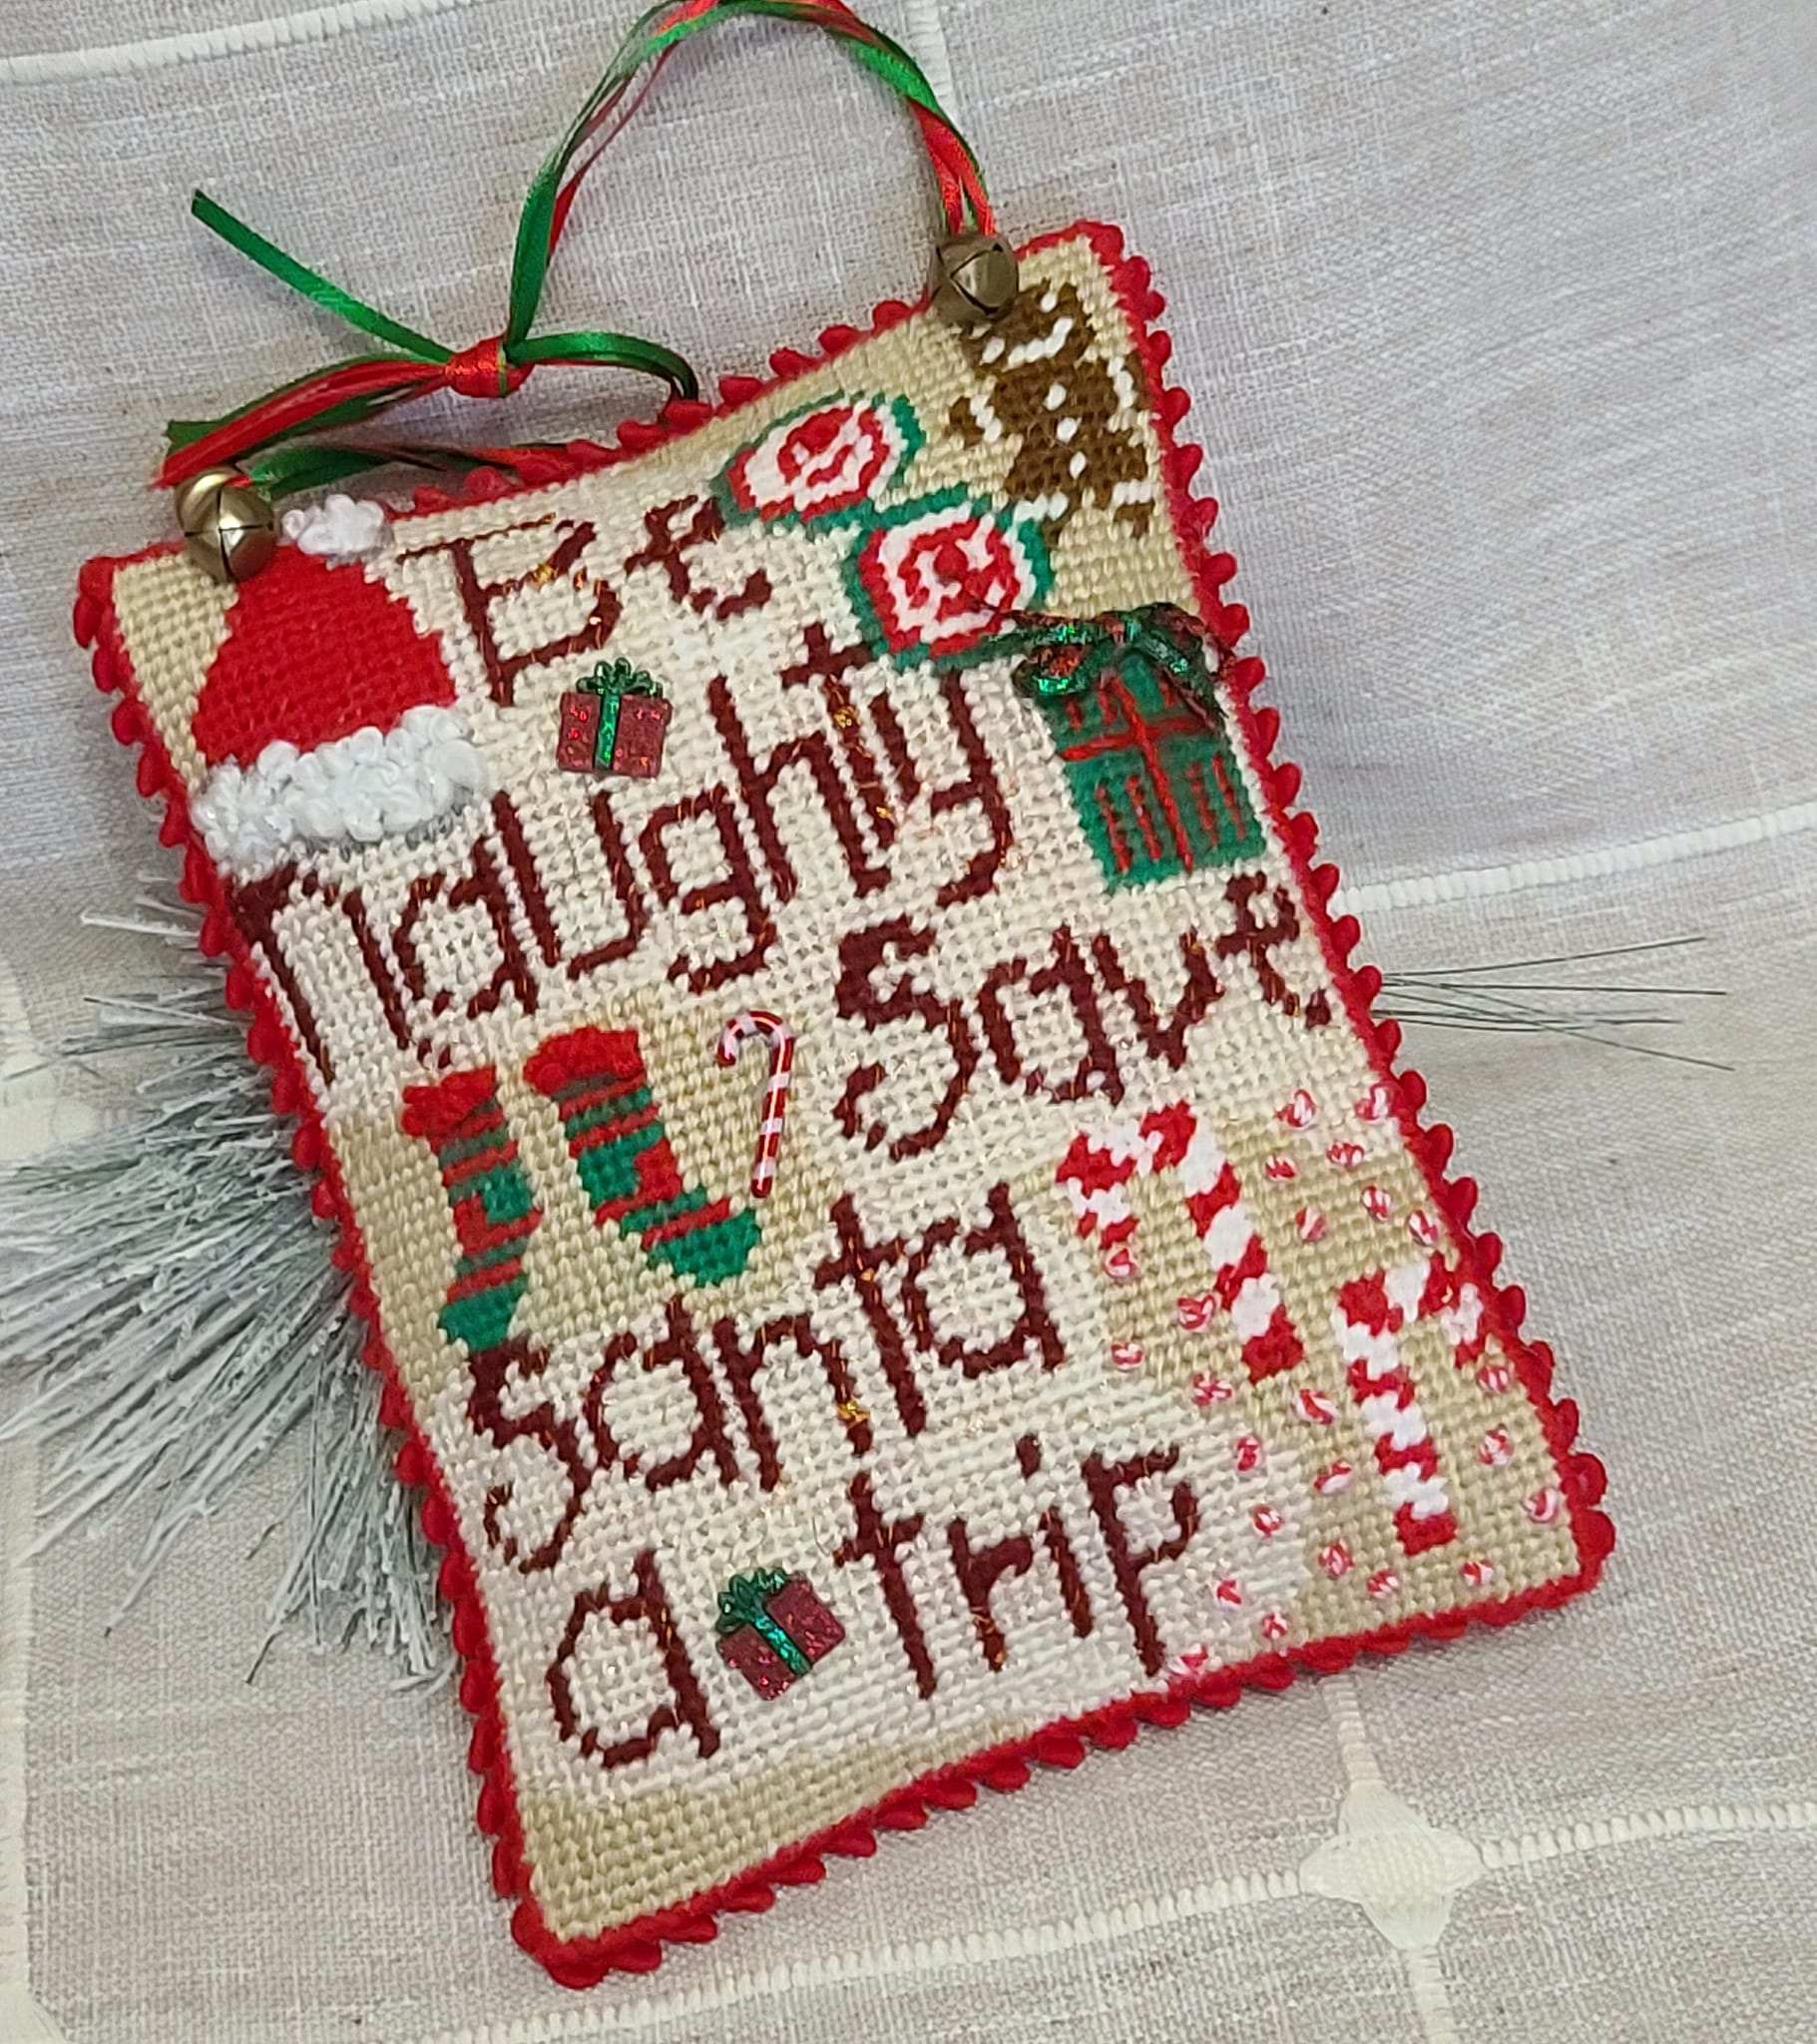 Needlepoint Save Santa a trip with embellisments, door hanger